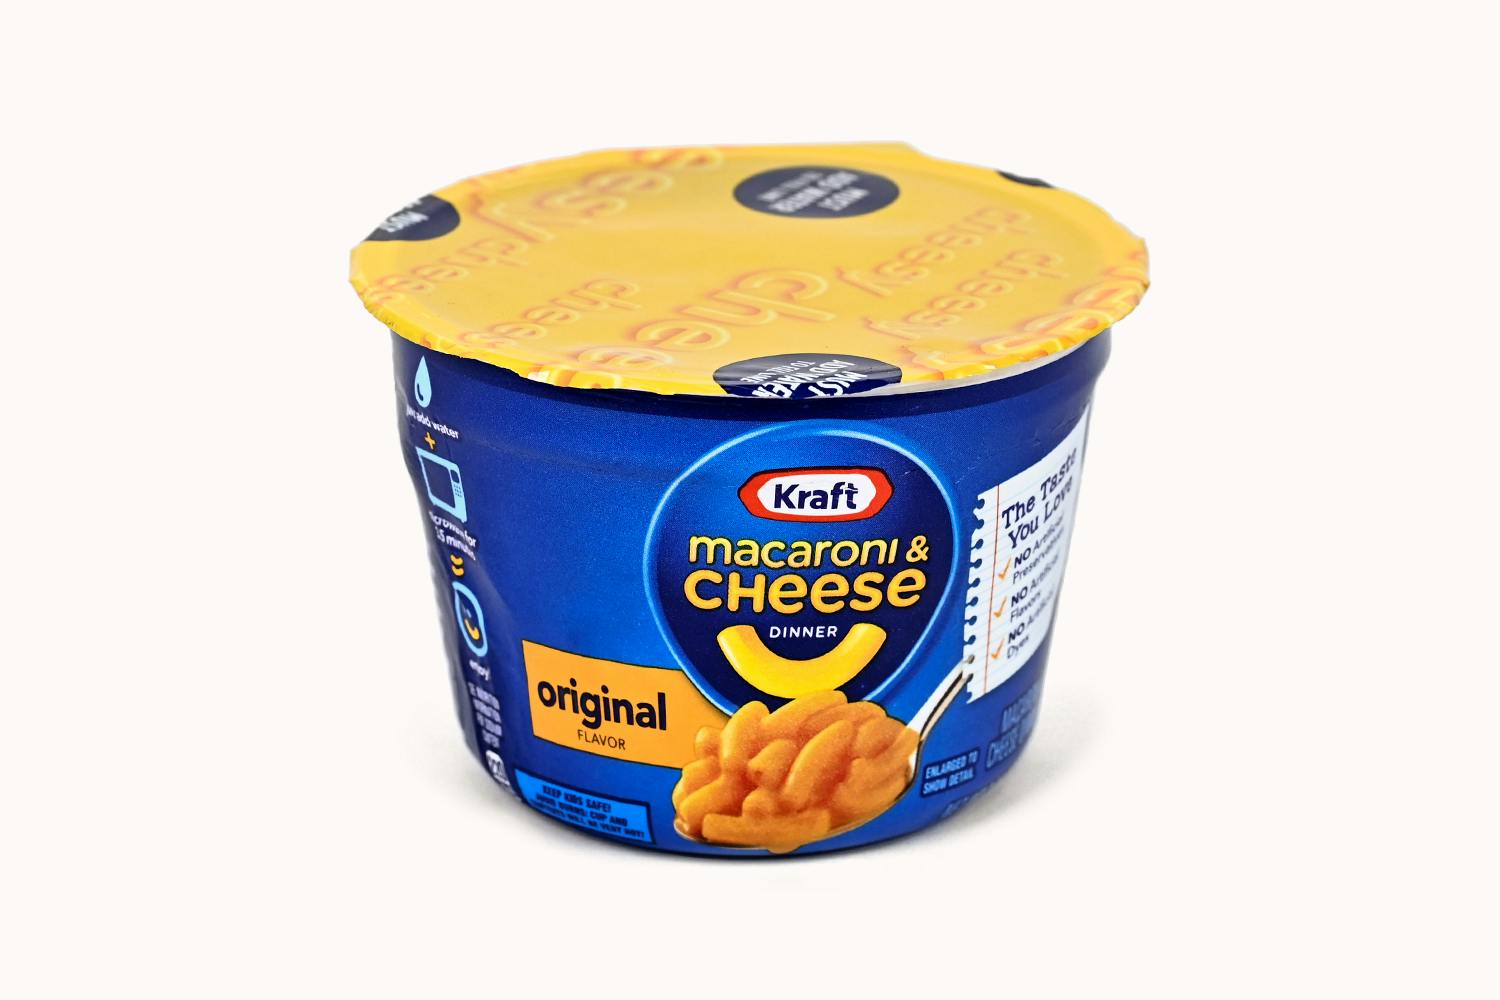 Kraft Macaroni & Cheese Dinner, Original Flavor